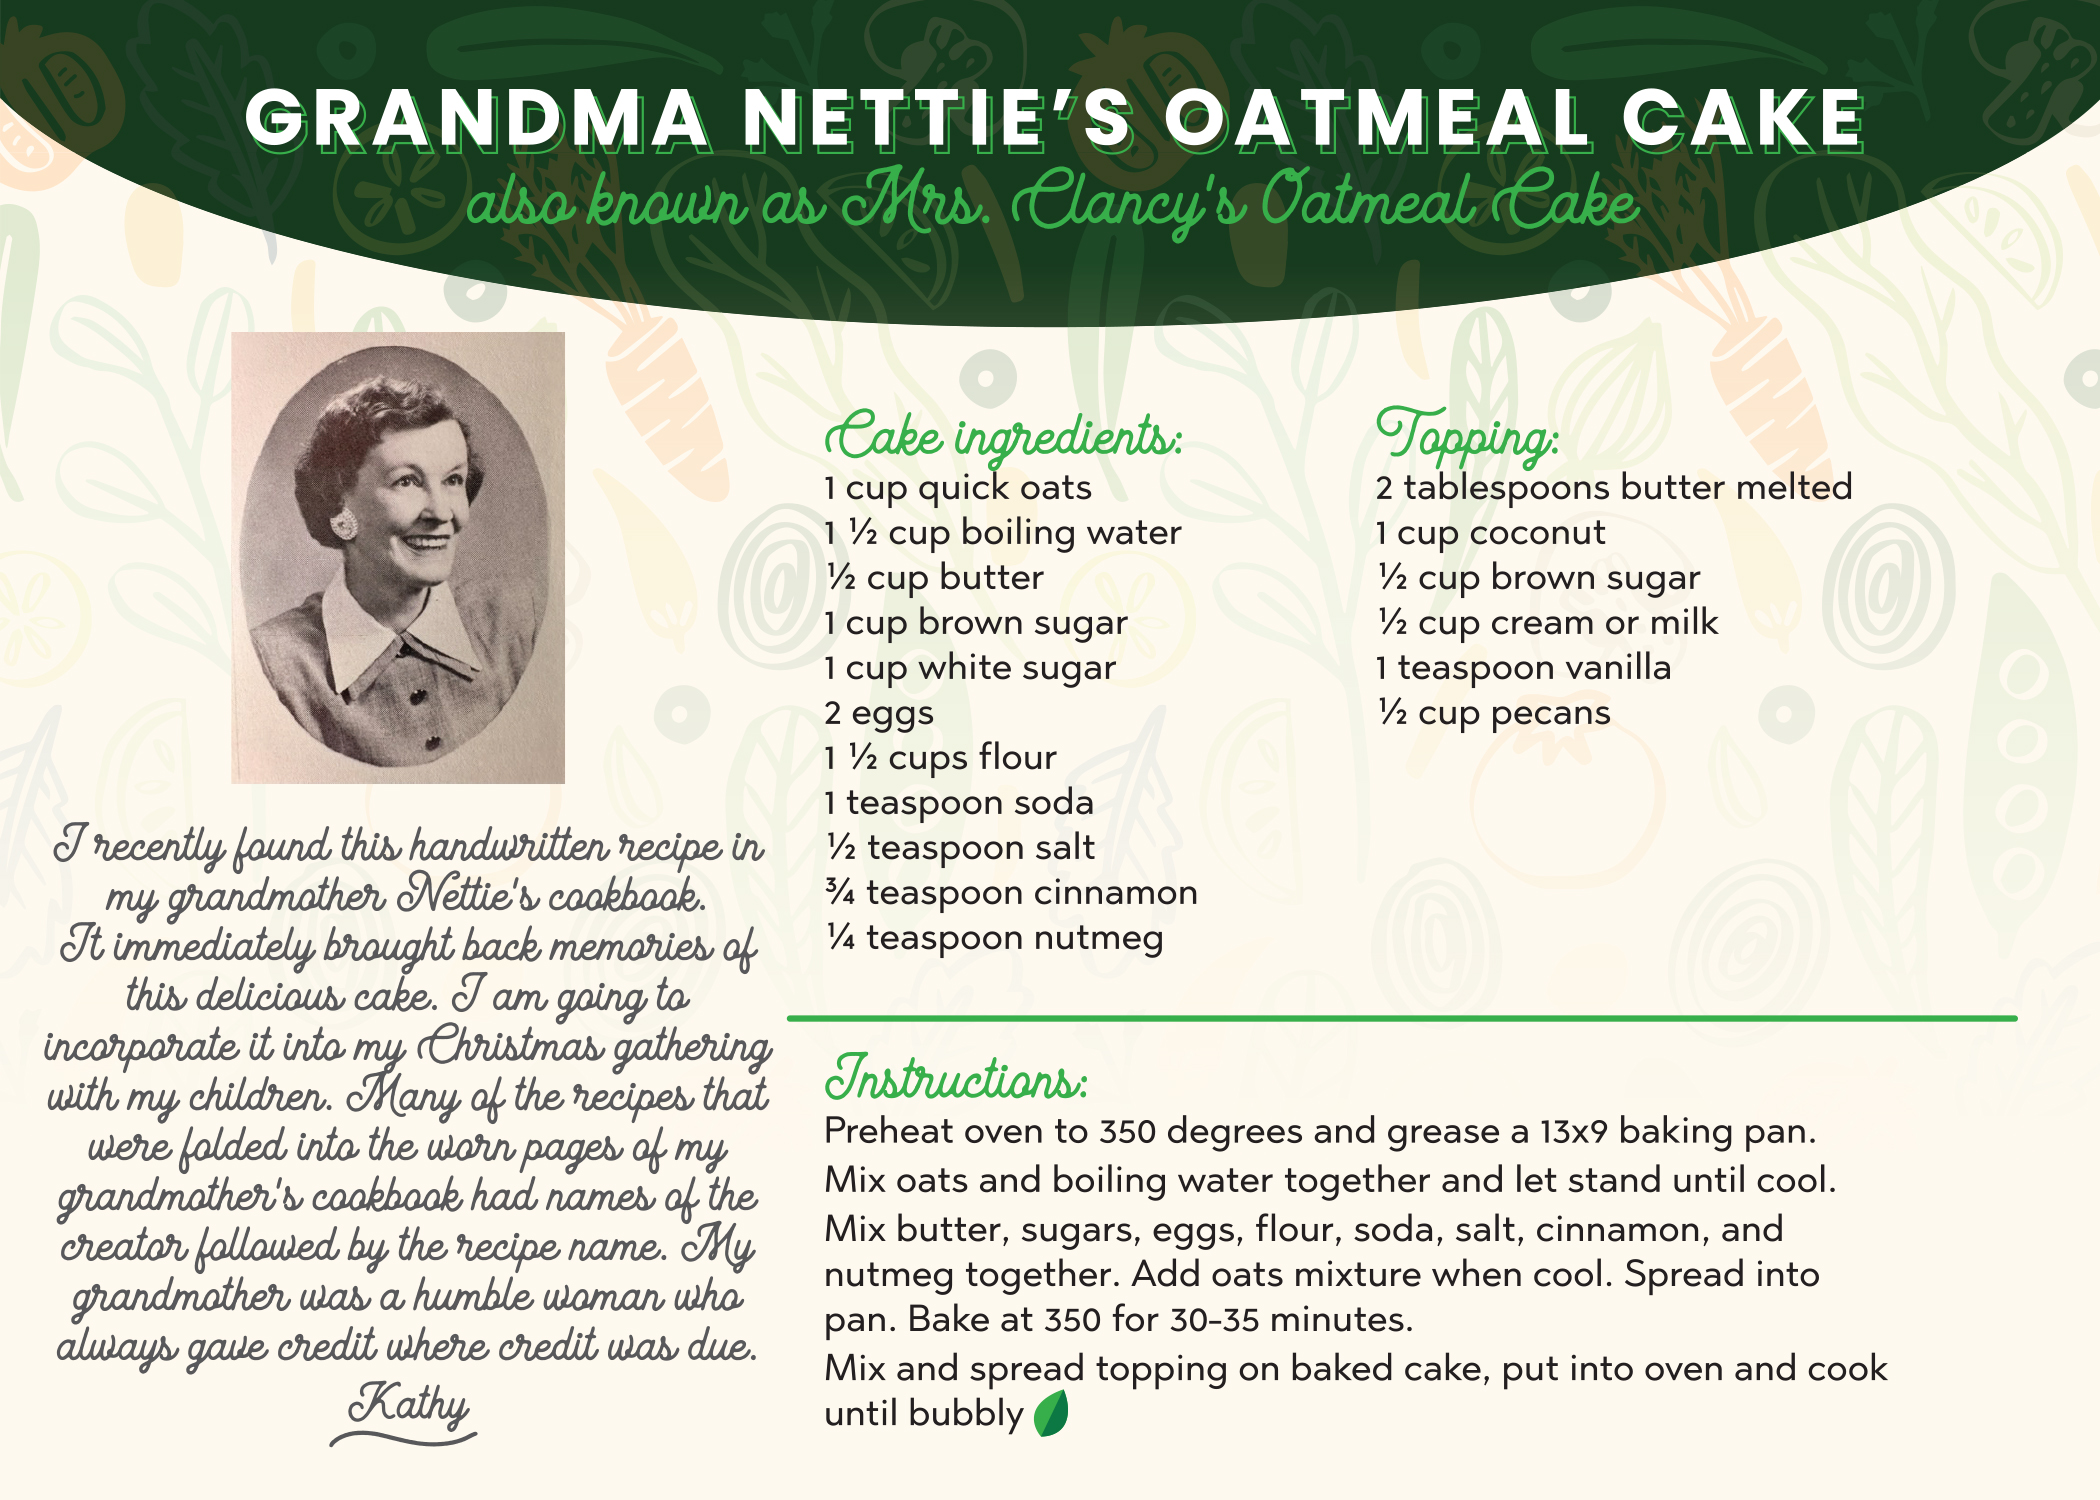 Recipe card for Grandma Nettie's Oatmeal Cake